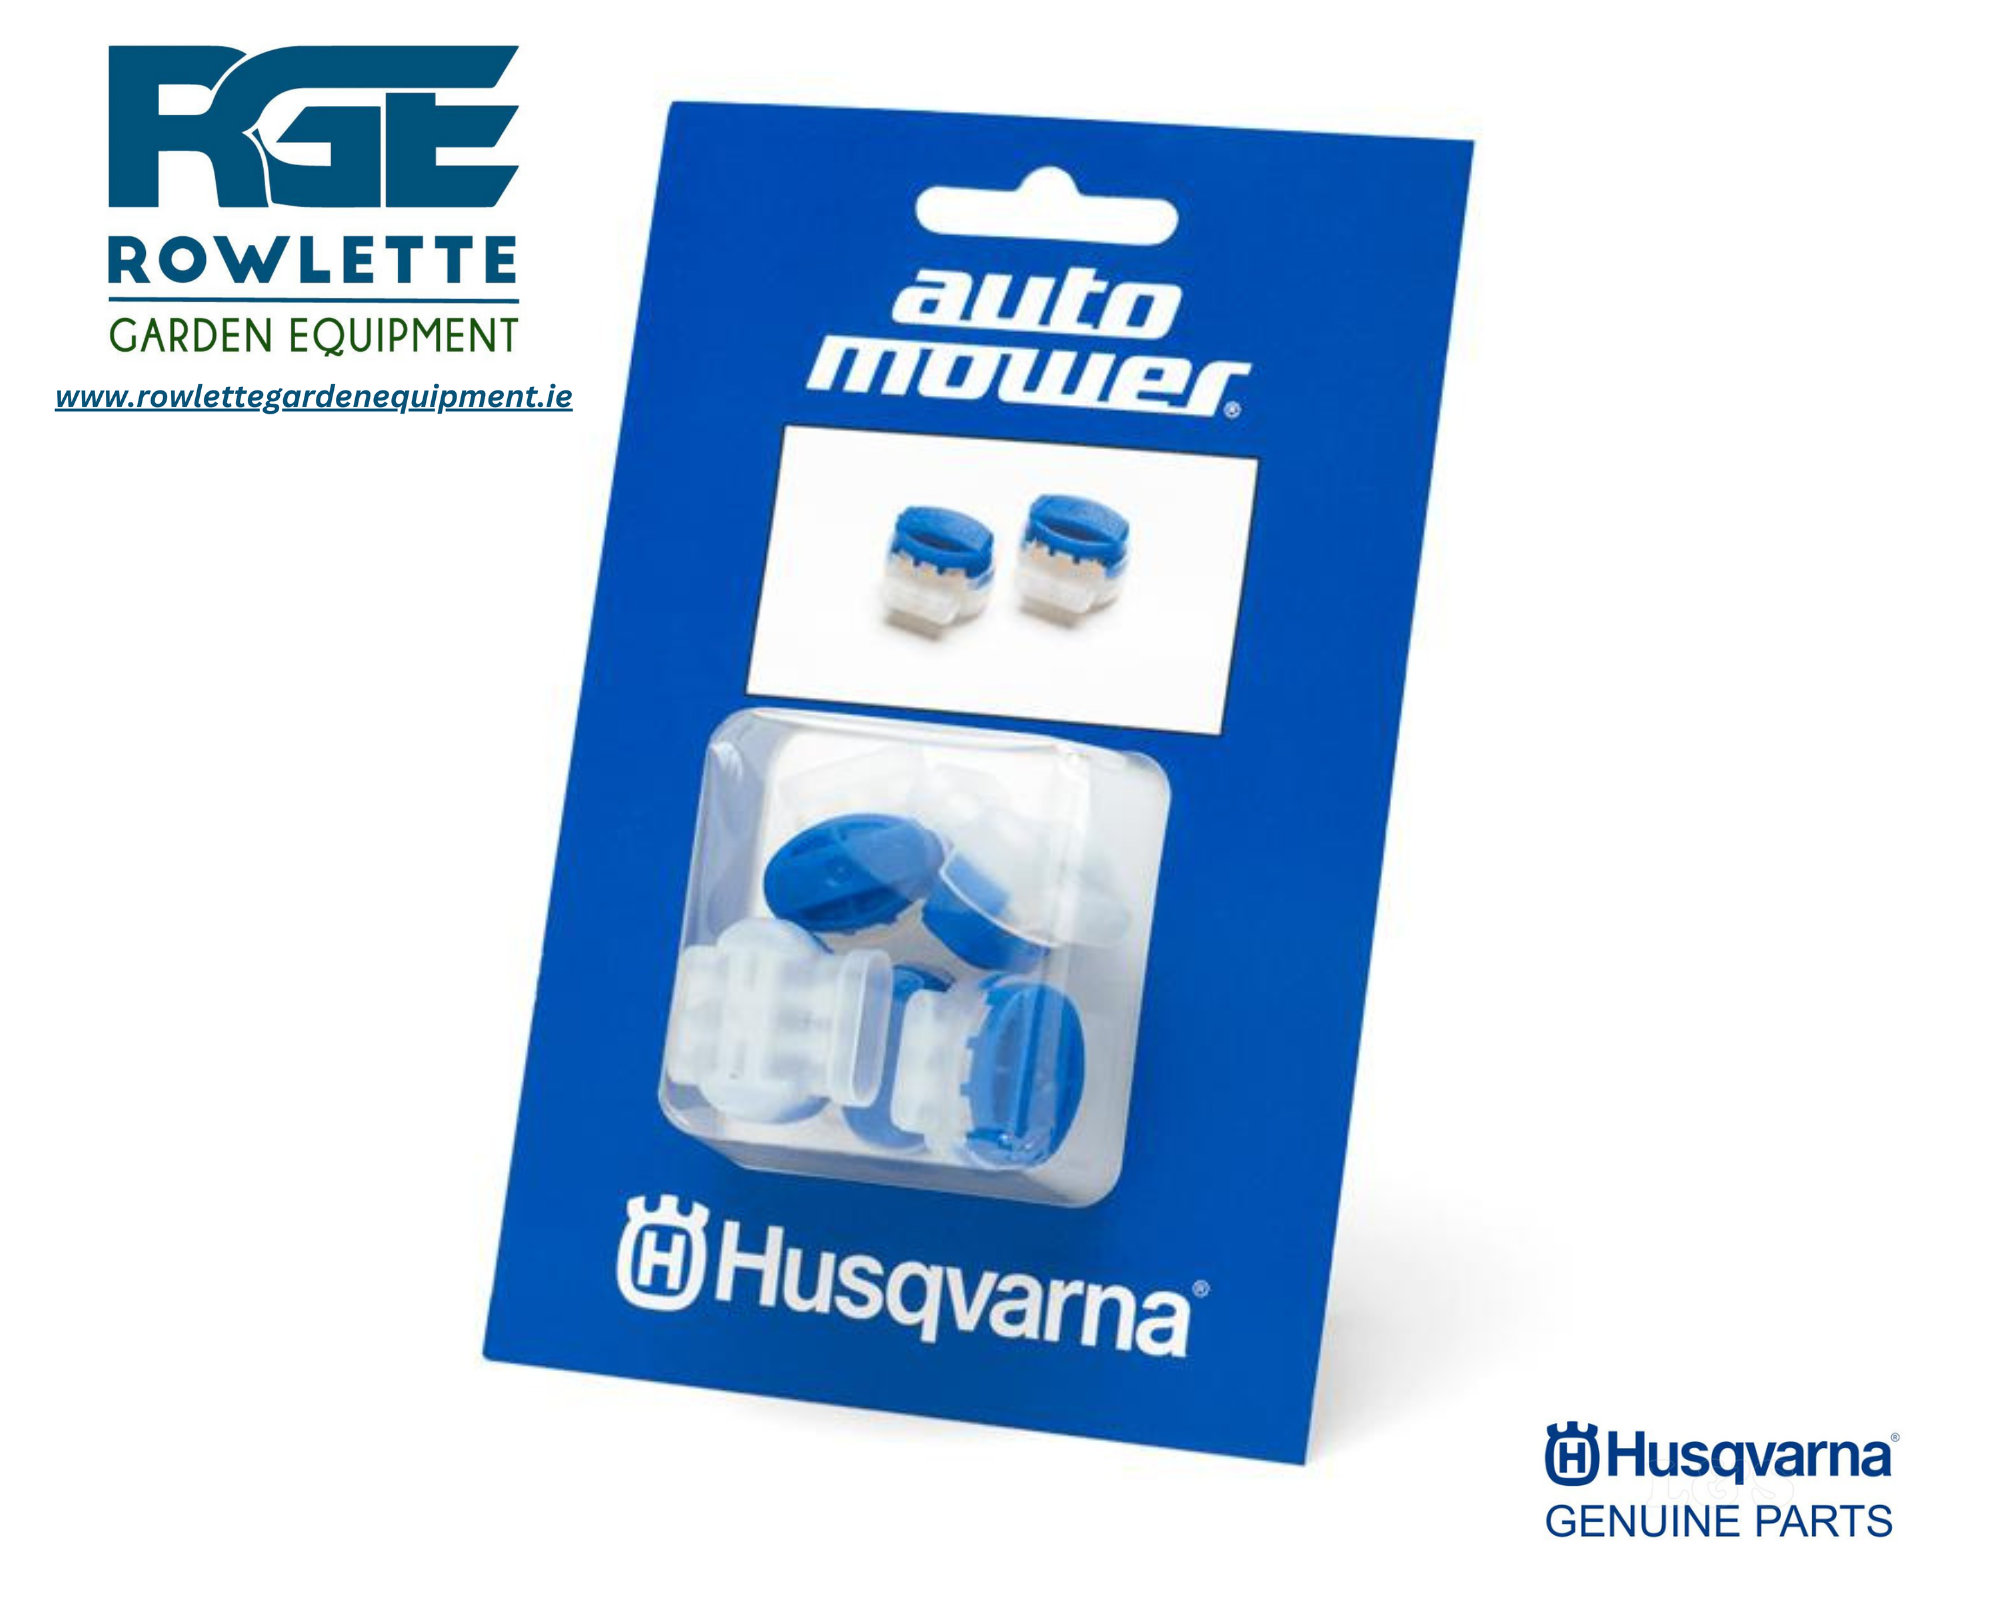 Husqvarna Automower® Coupler (5 pack)